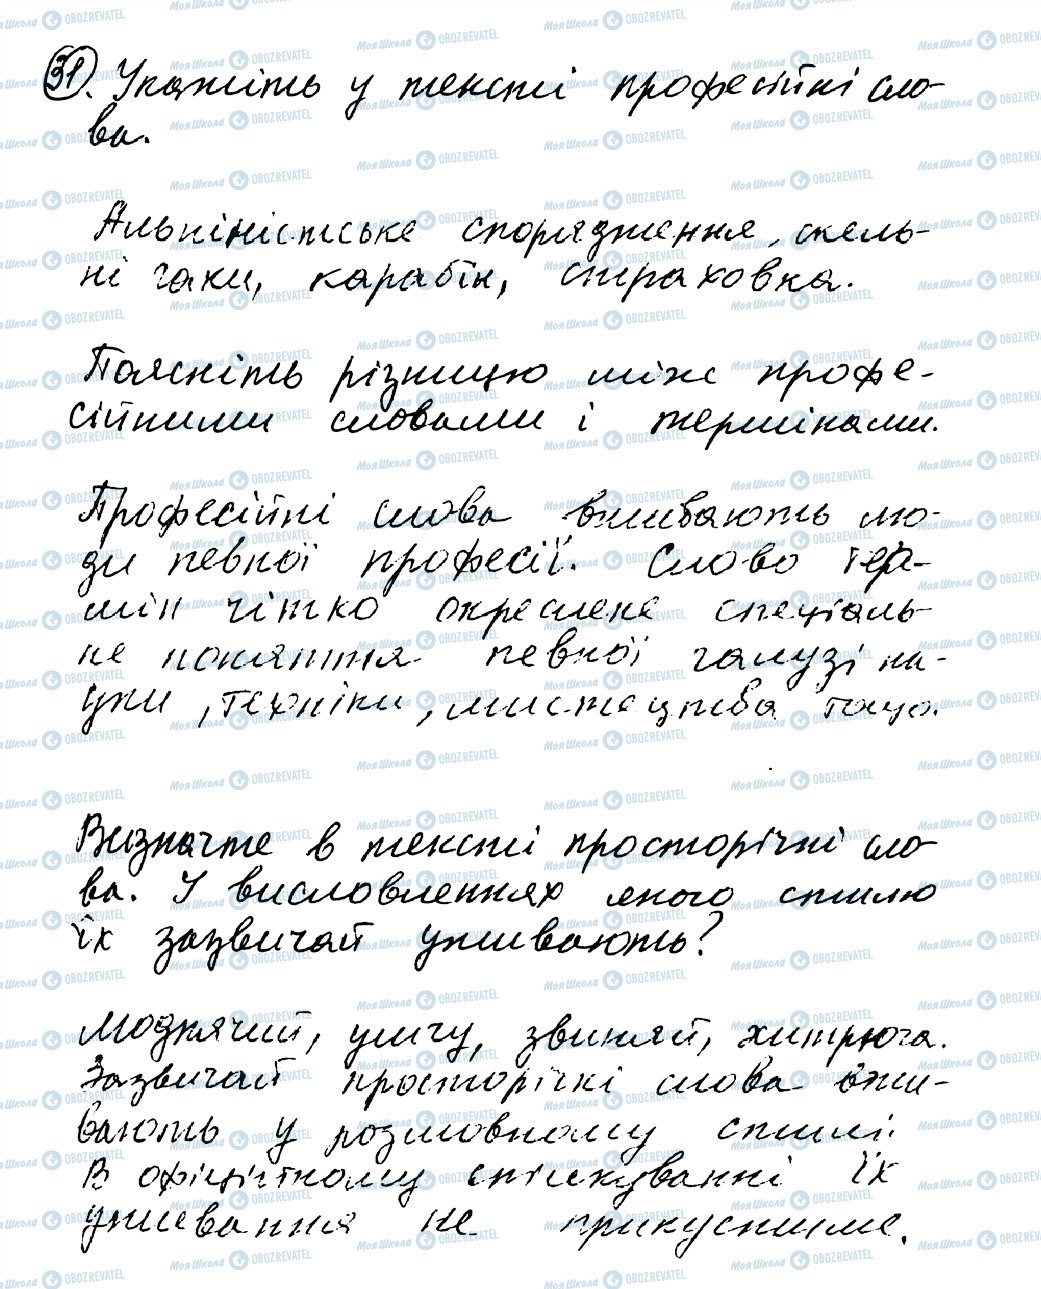 ГДЗ Укр мова 8 класс страница 31